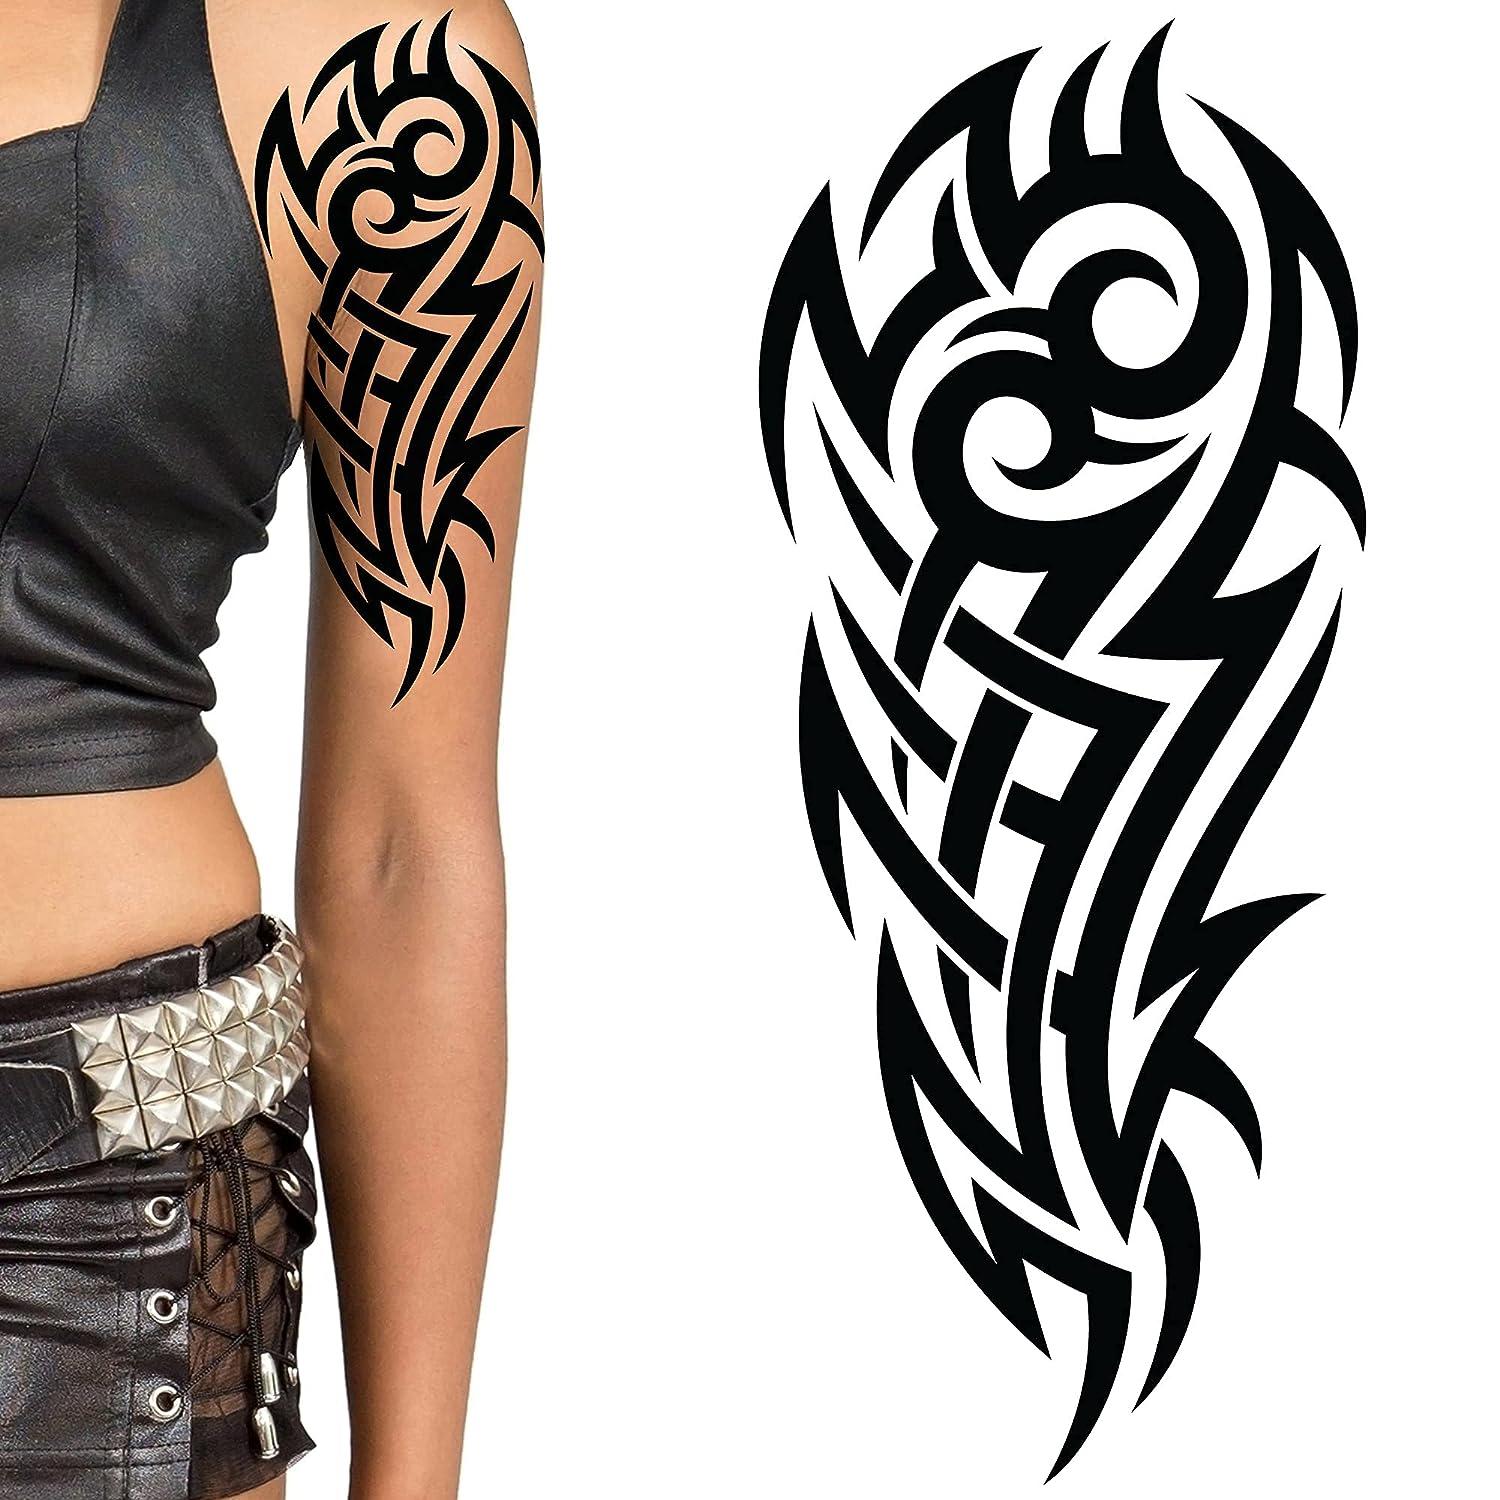  4 Pack Stick on black temporary tattoo maui tribal body art  sticker transfer for arms shoulder aztec polynesian samoan hawaiian for  adult men and women (4 x all tribal tattoo